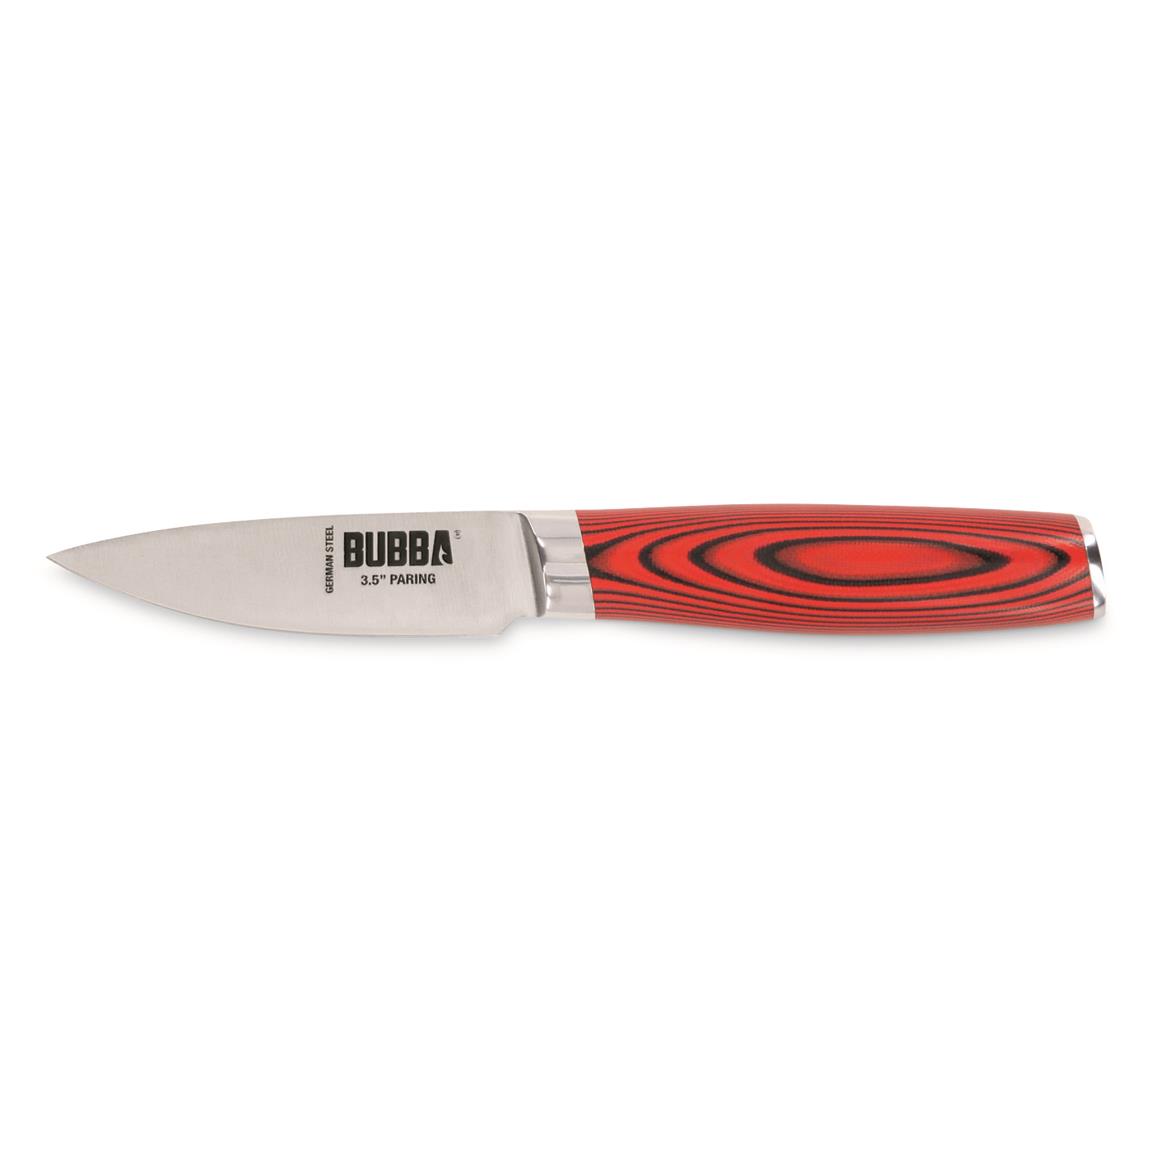 Bubba 3.5" Paring Knife